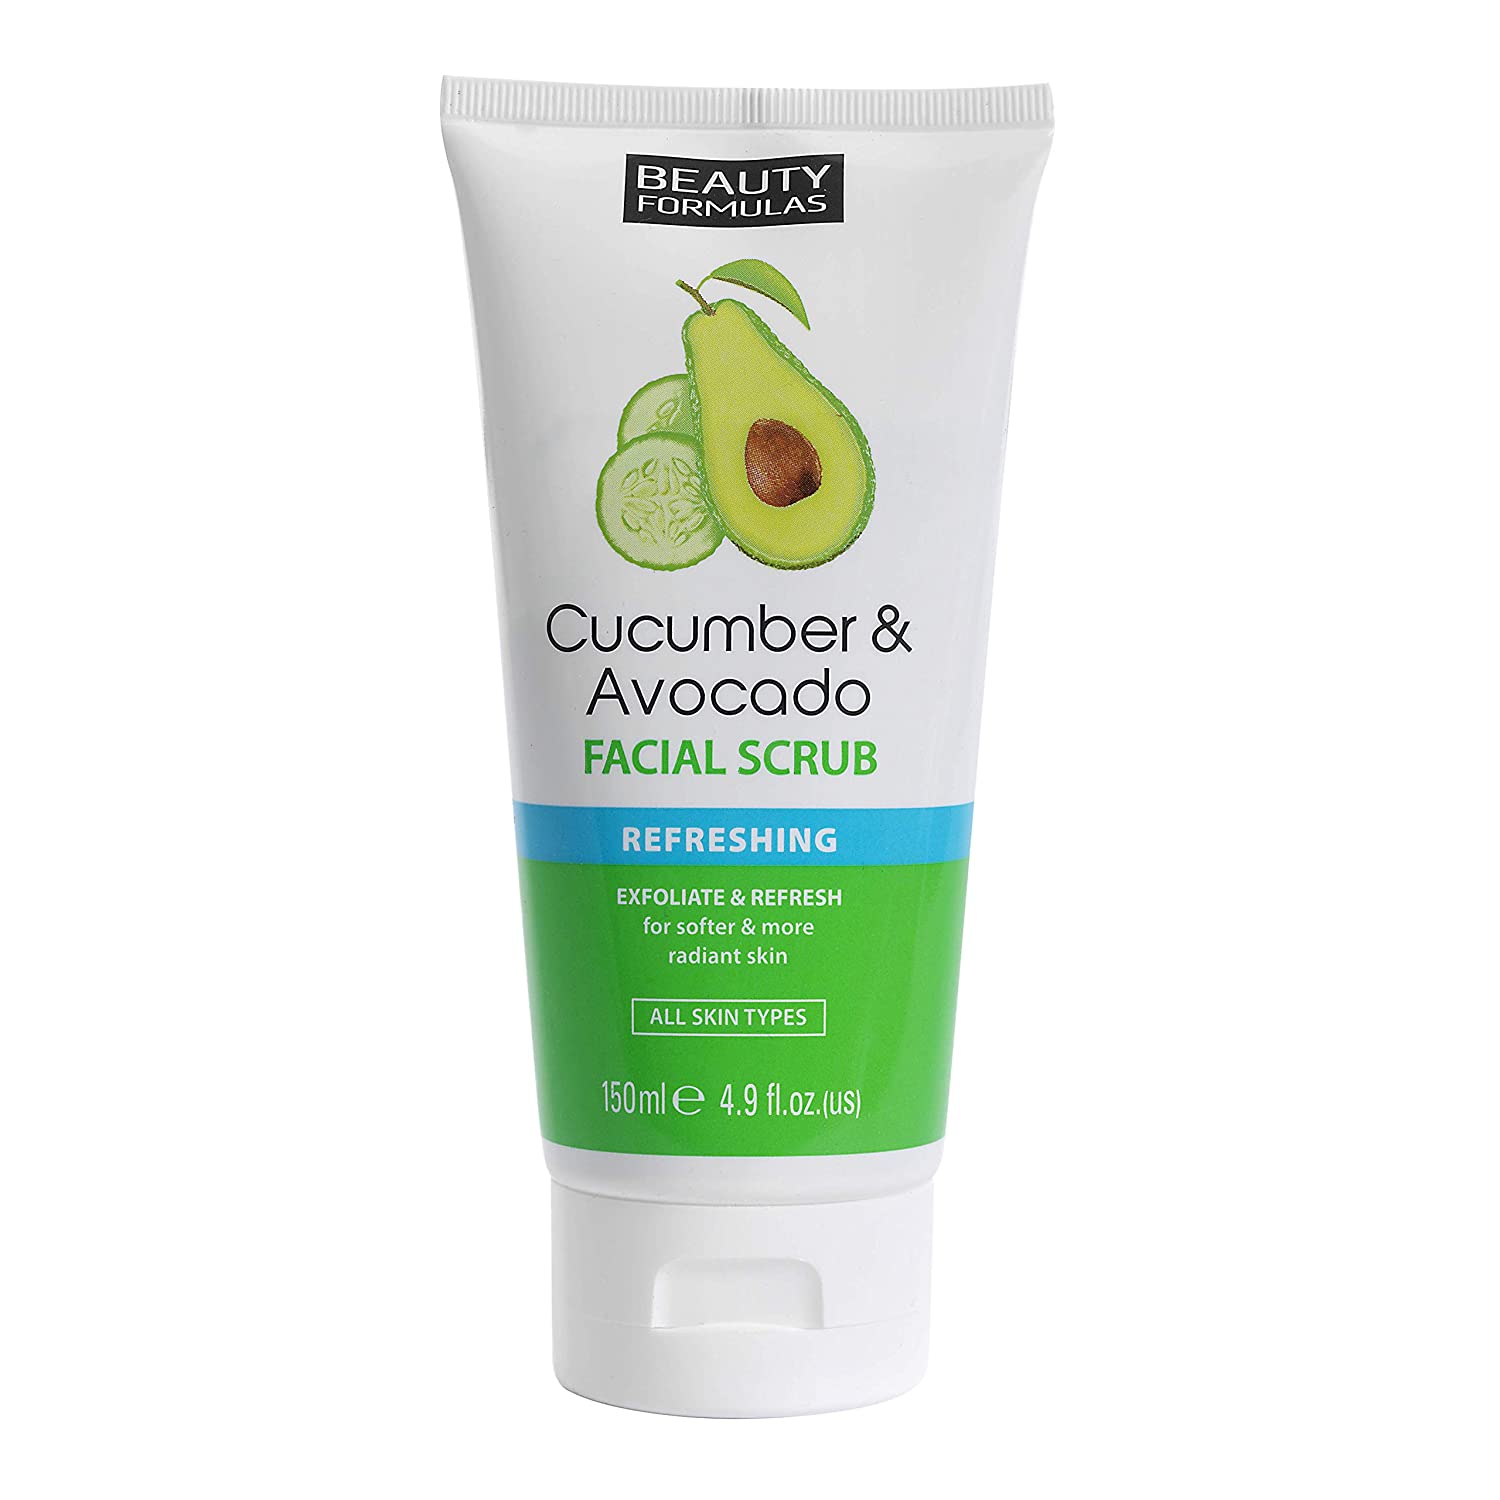 Beauty Formulas Cucumber & Avocado Facial Scrub Refreshing (150ml)